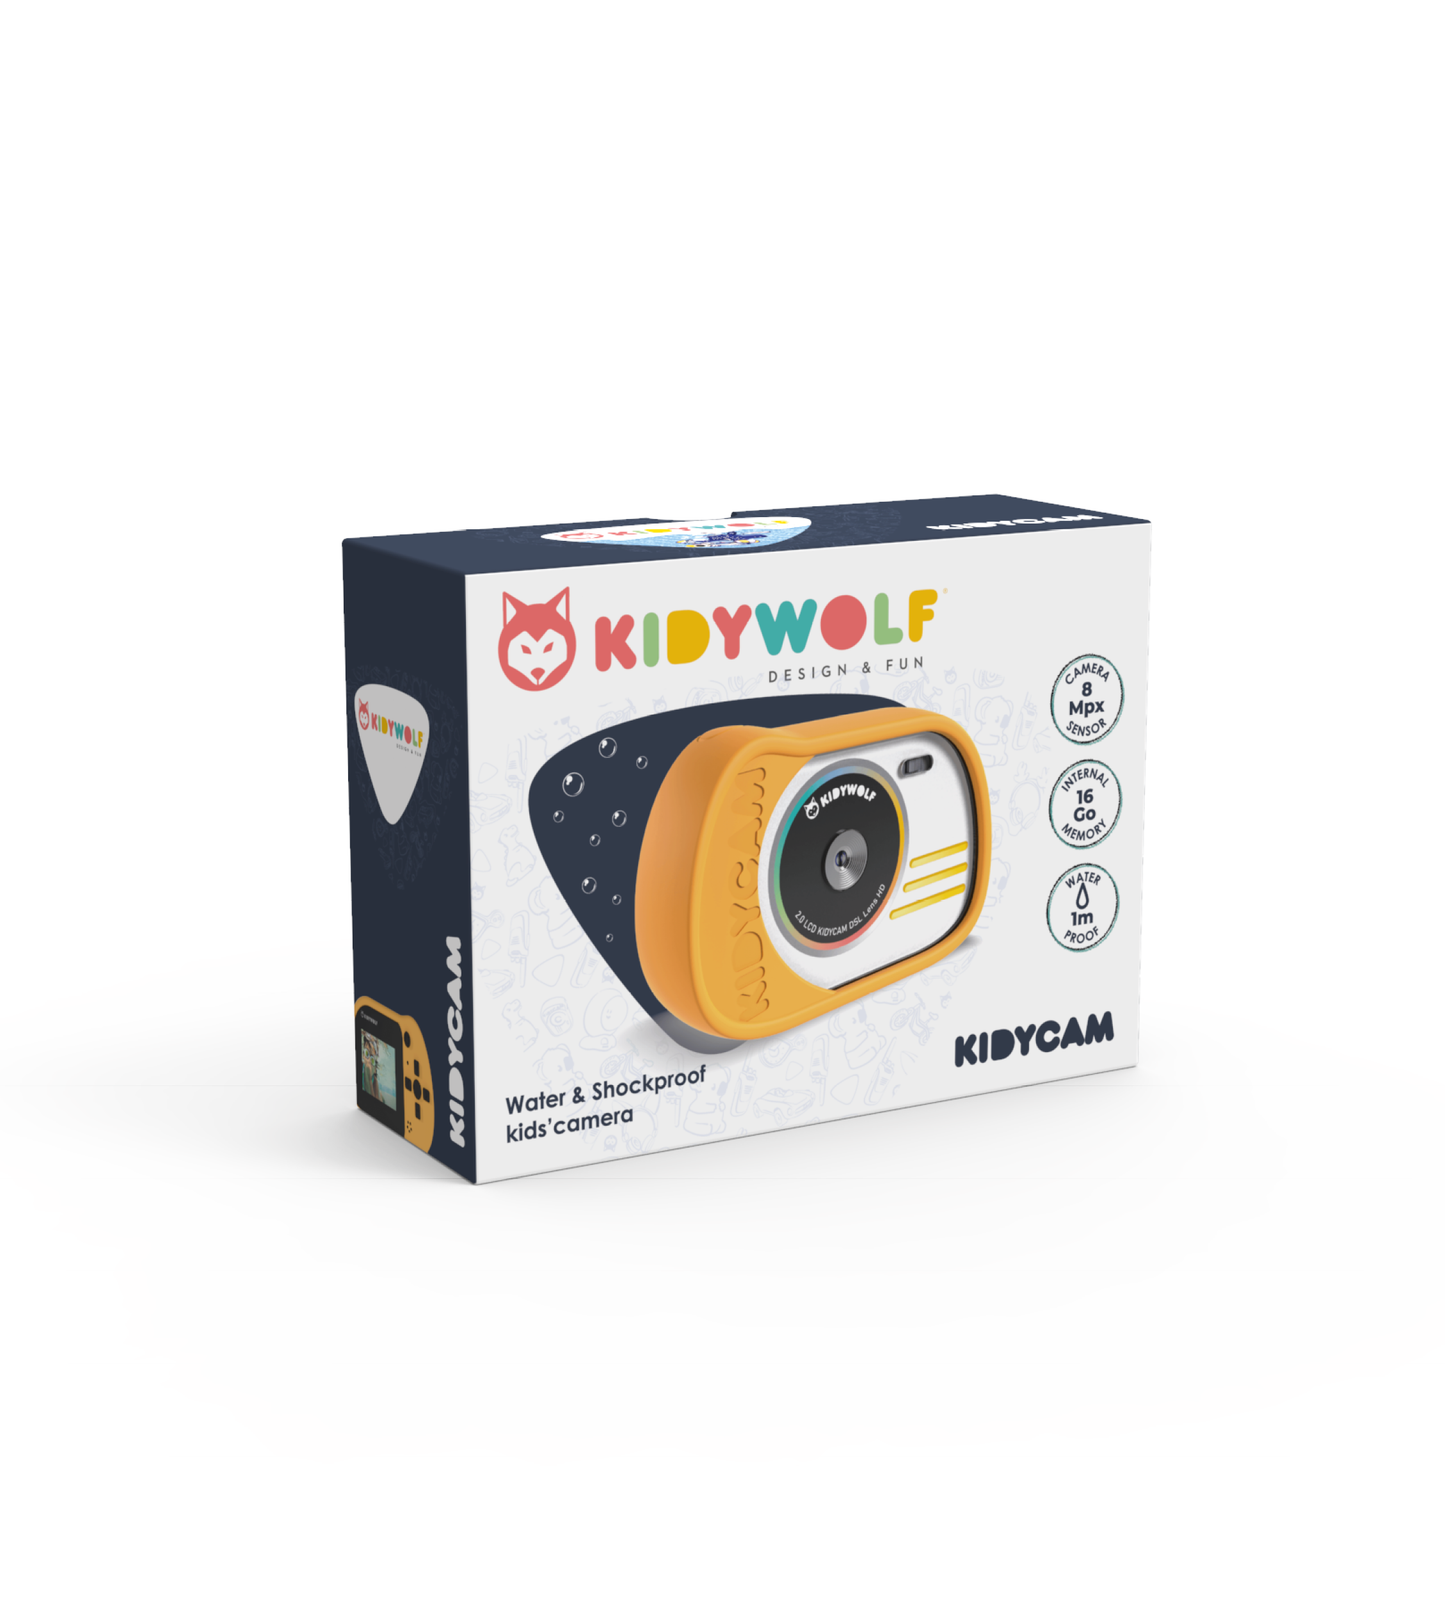 kidywolf - Kidycam Camera yellow